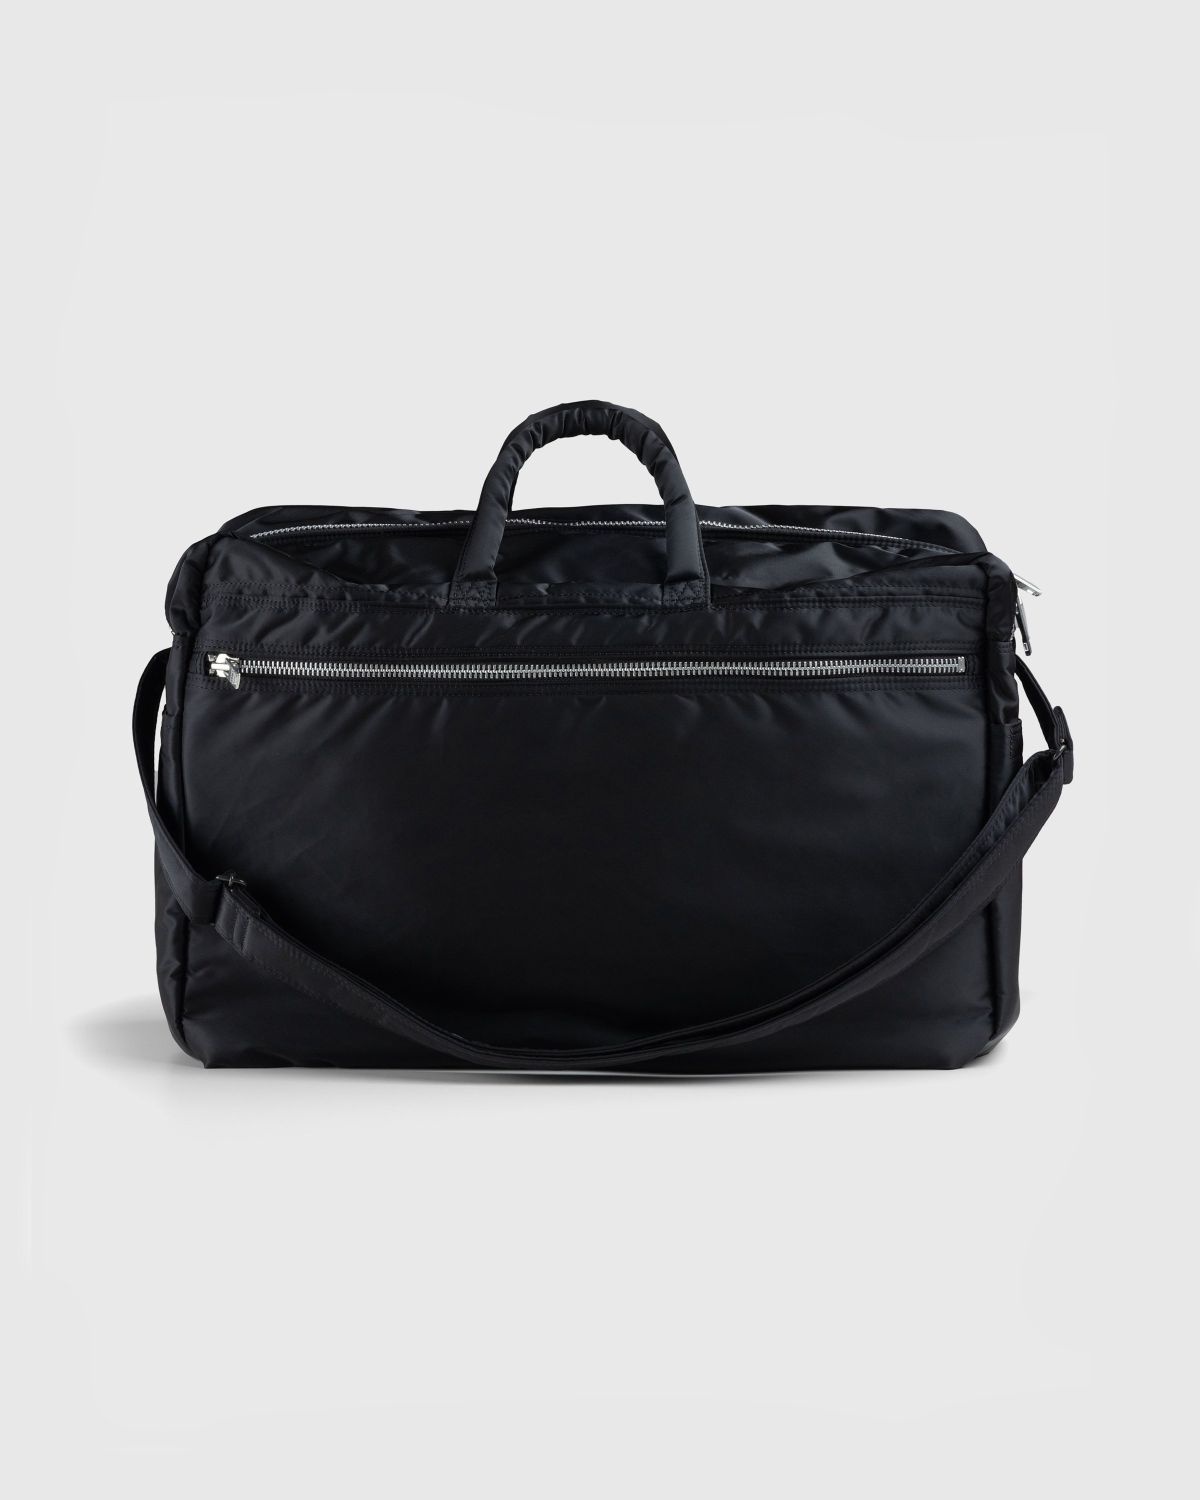 Porter-Yoshida & Co. – Tanker 2-Way Duffle Bag (S) Black